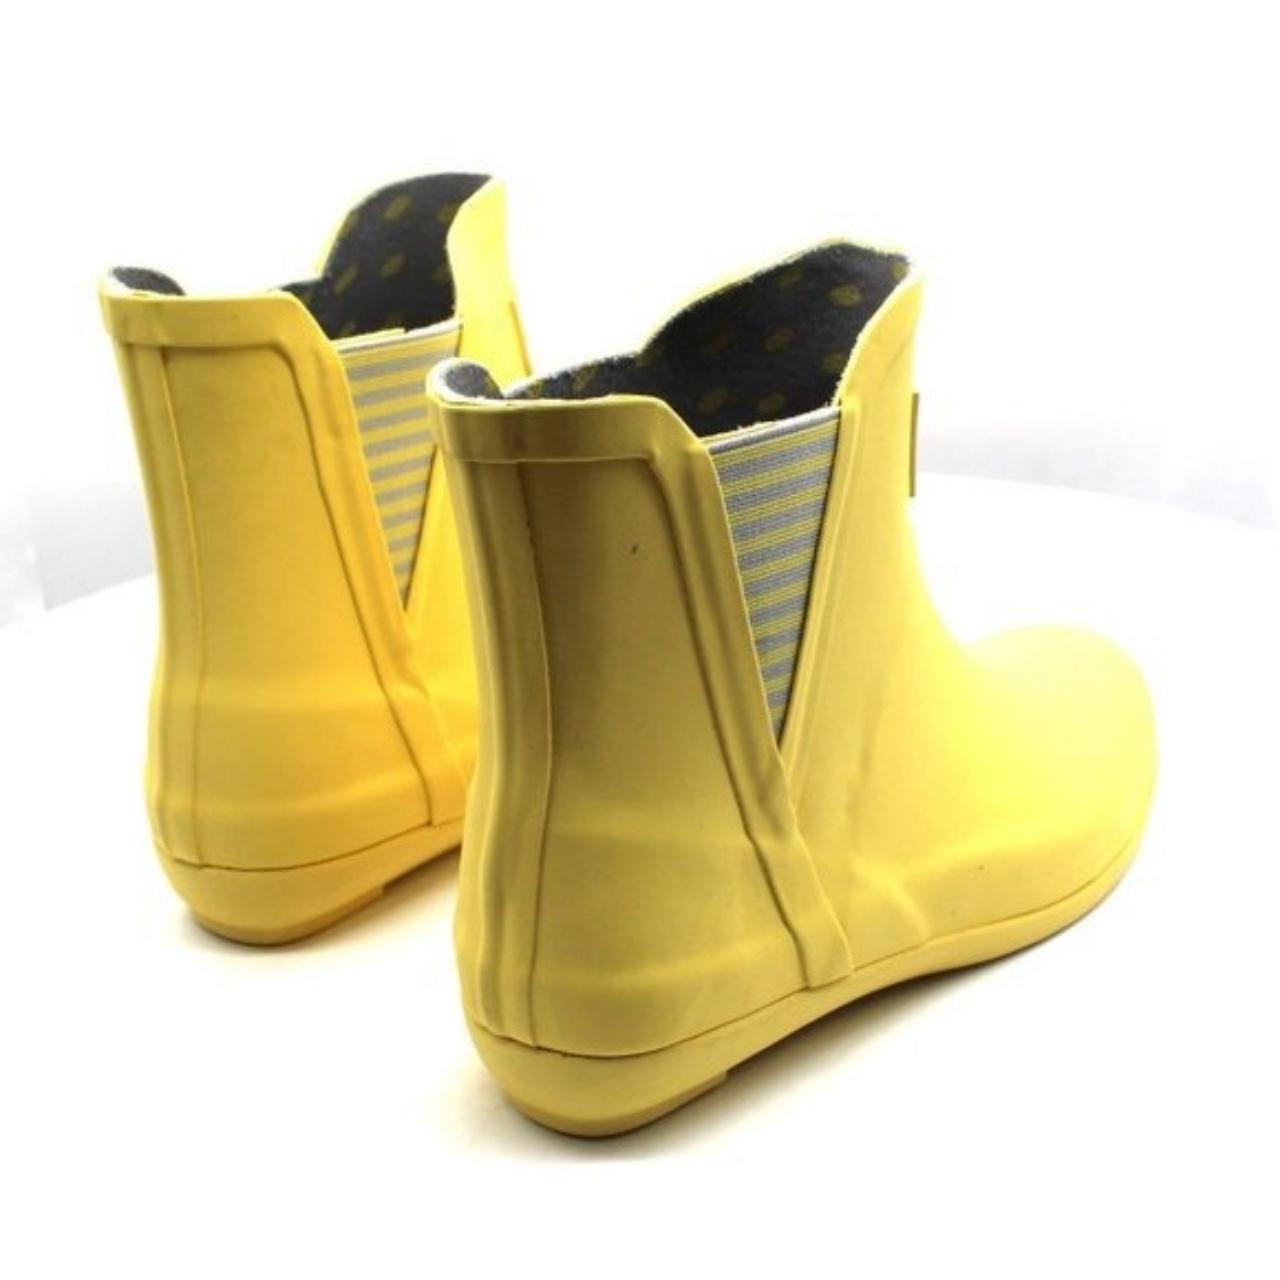 London Fog Women's Yellow Boots (4)